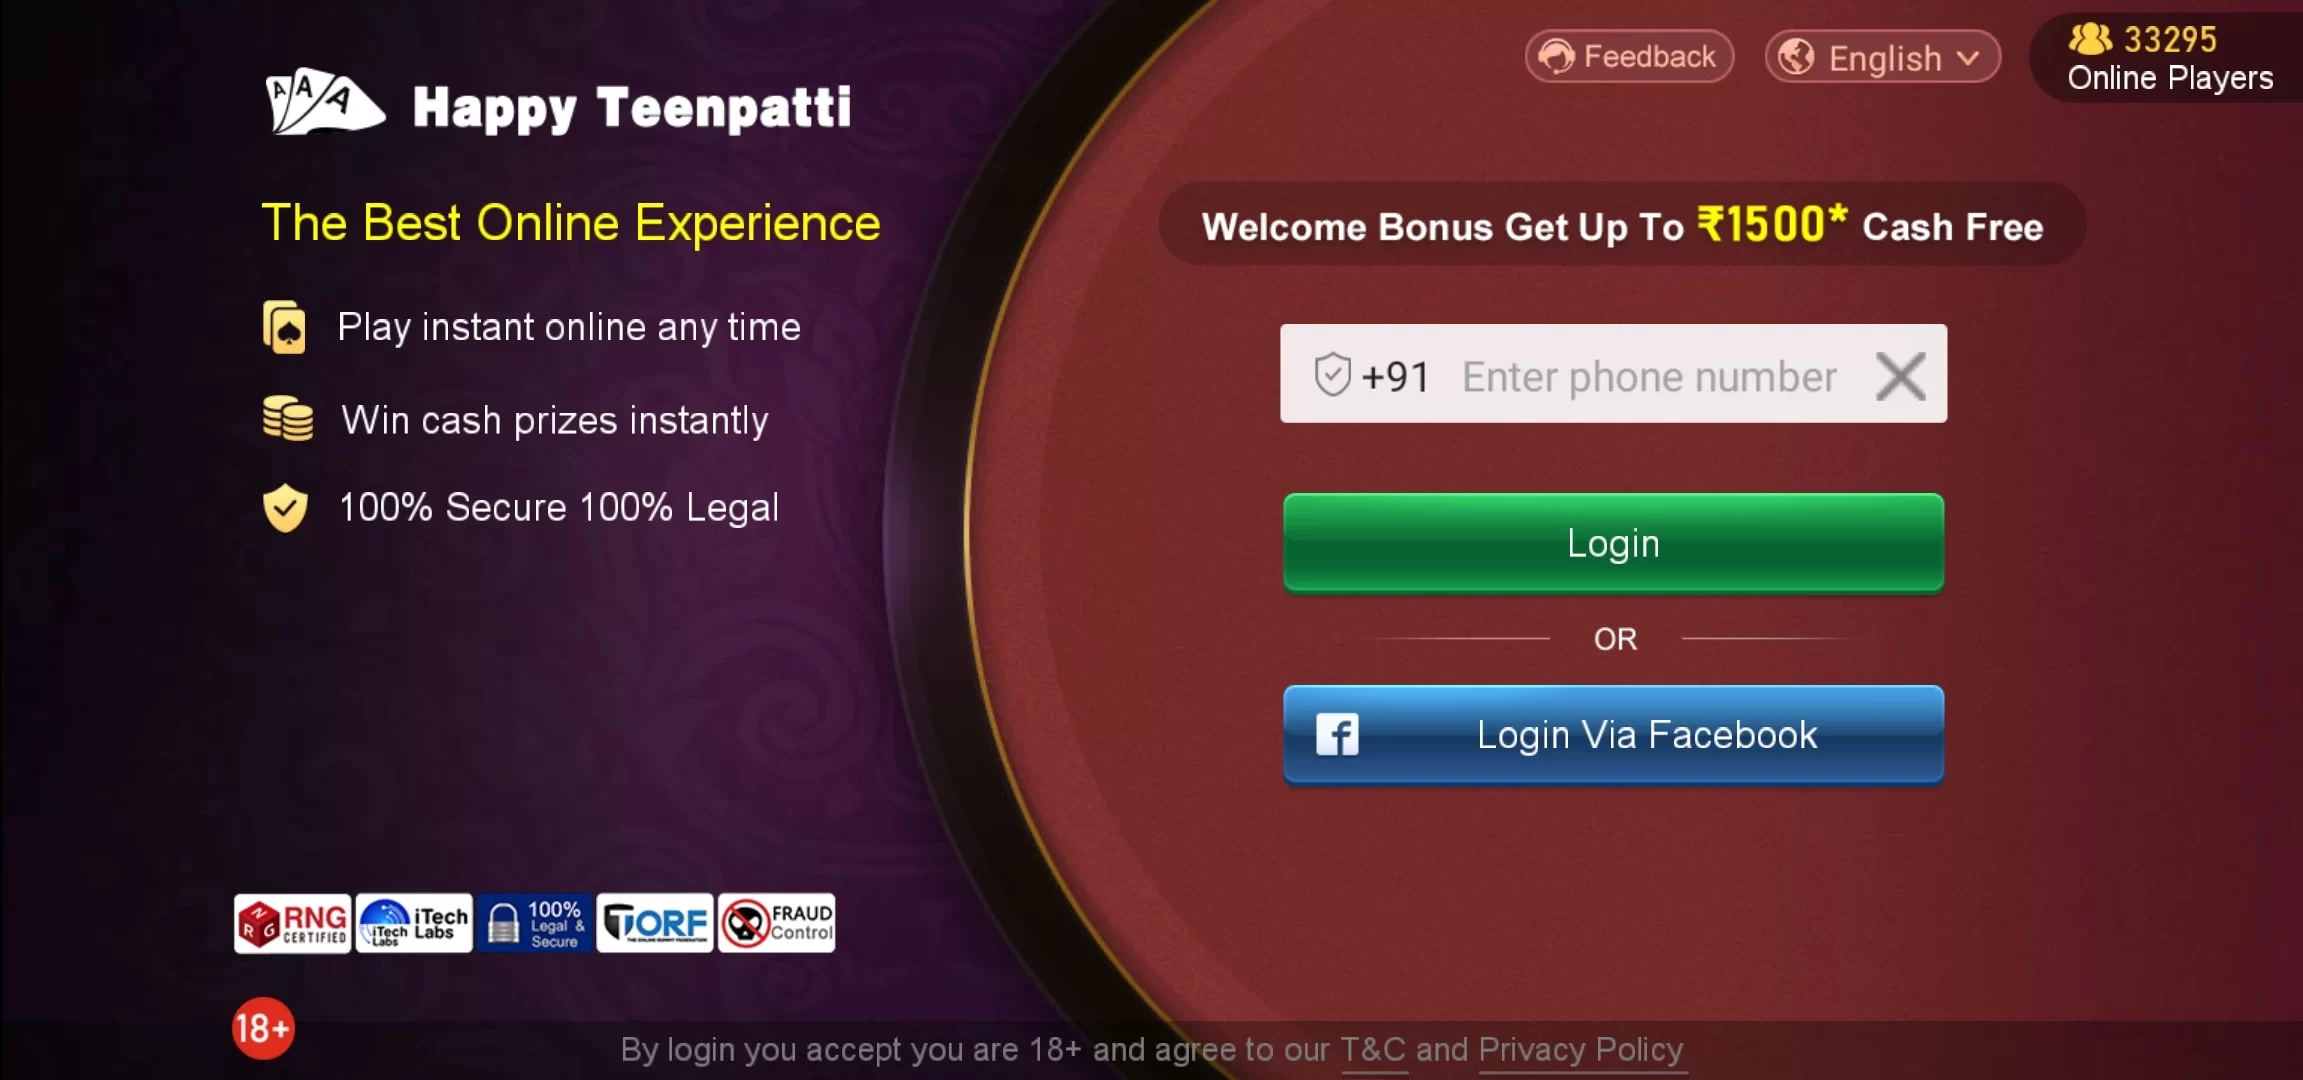 Register On Happy Teen Patti & Get ₹10 Bonus